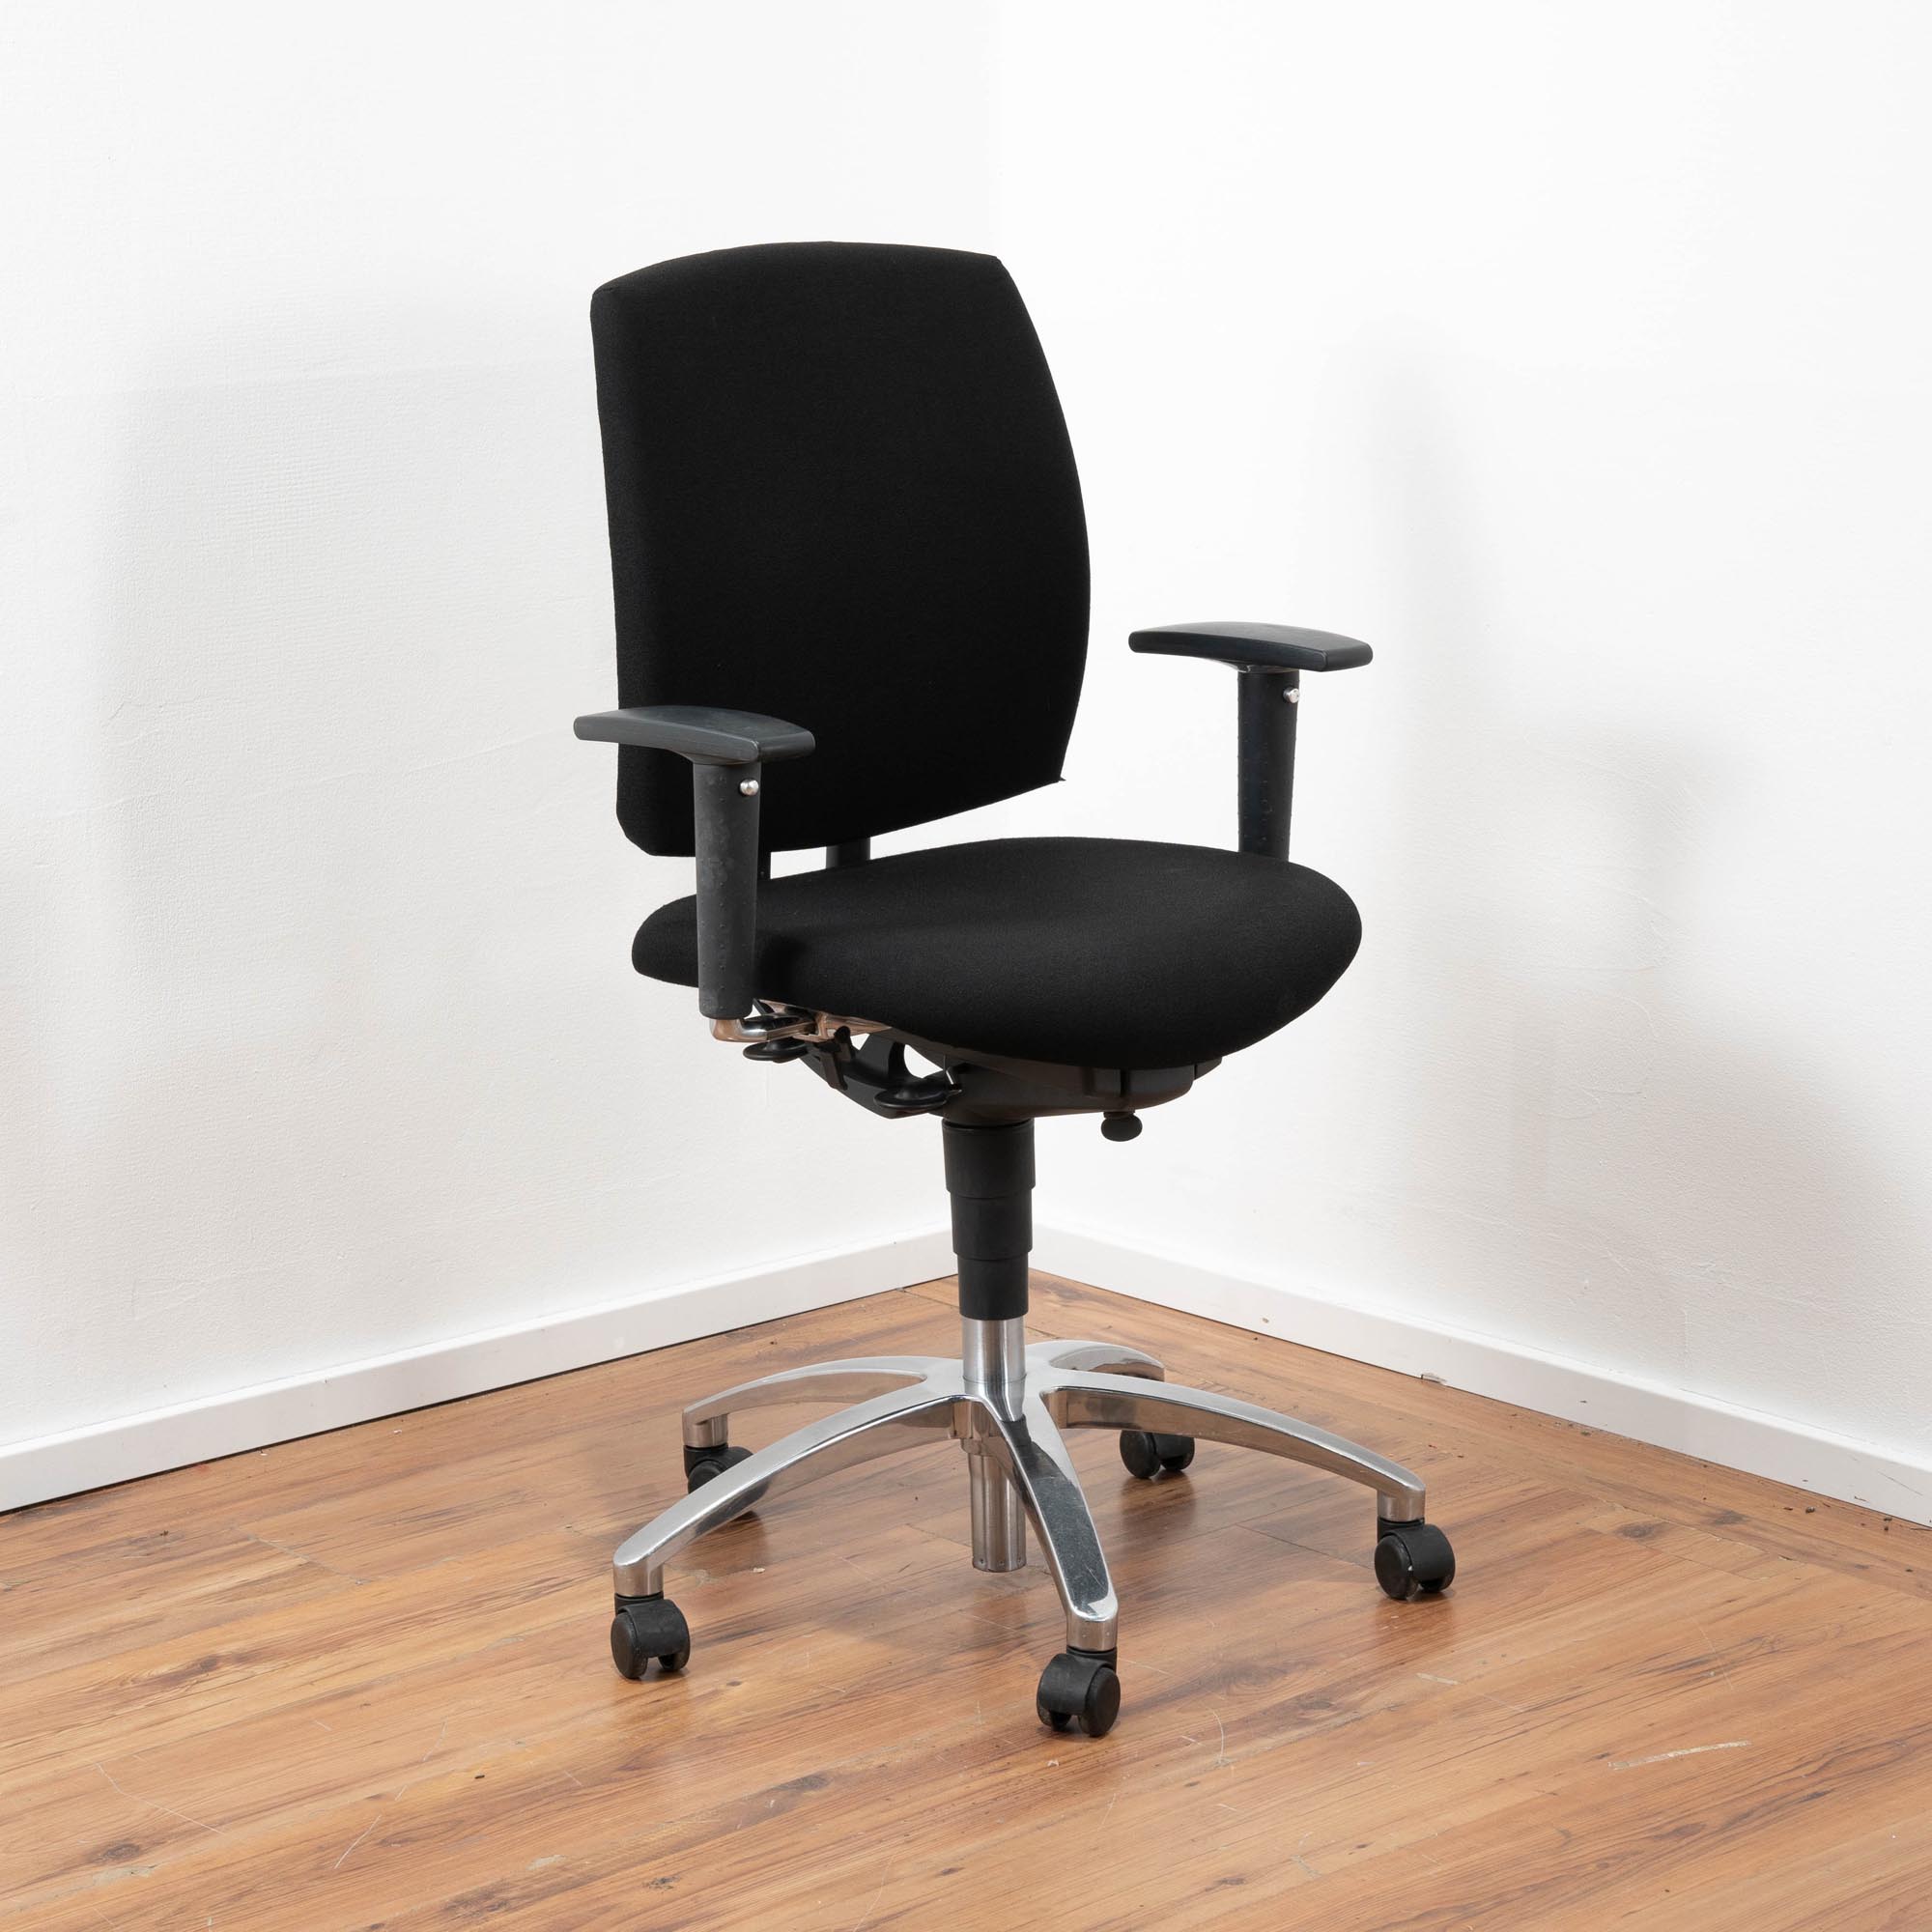 Drabert Bürodrehstuhl Polster schwarz - 3D-Armlehnen - Rückenlehne höhenverstellbar - Gestell Chrom